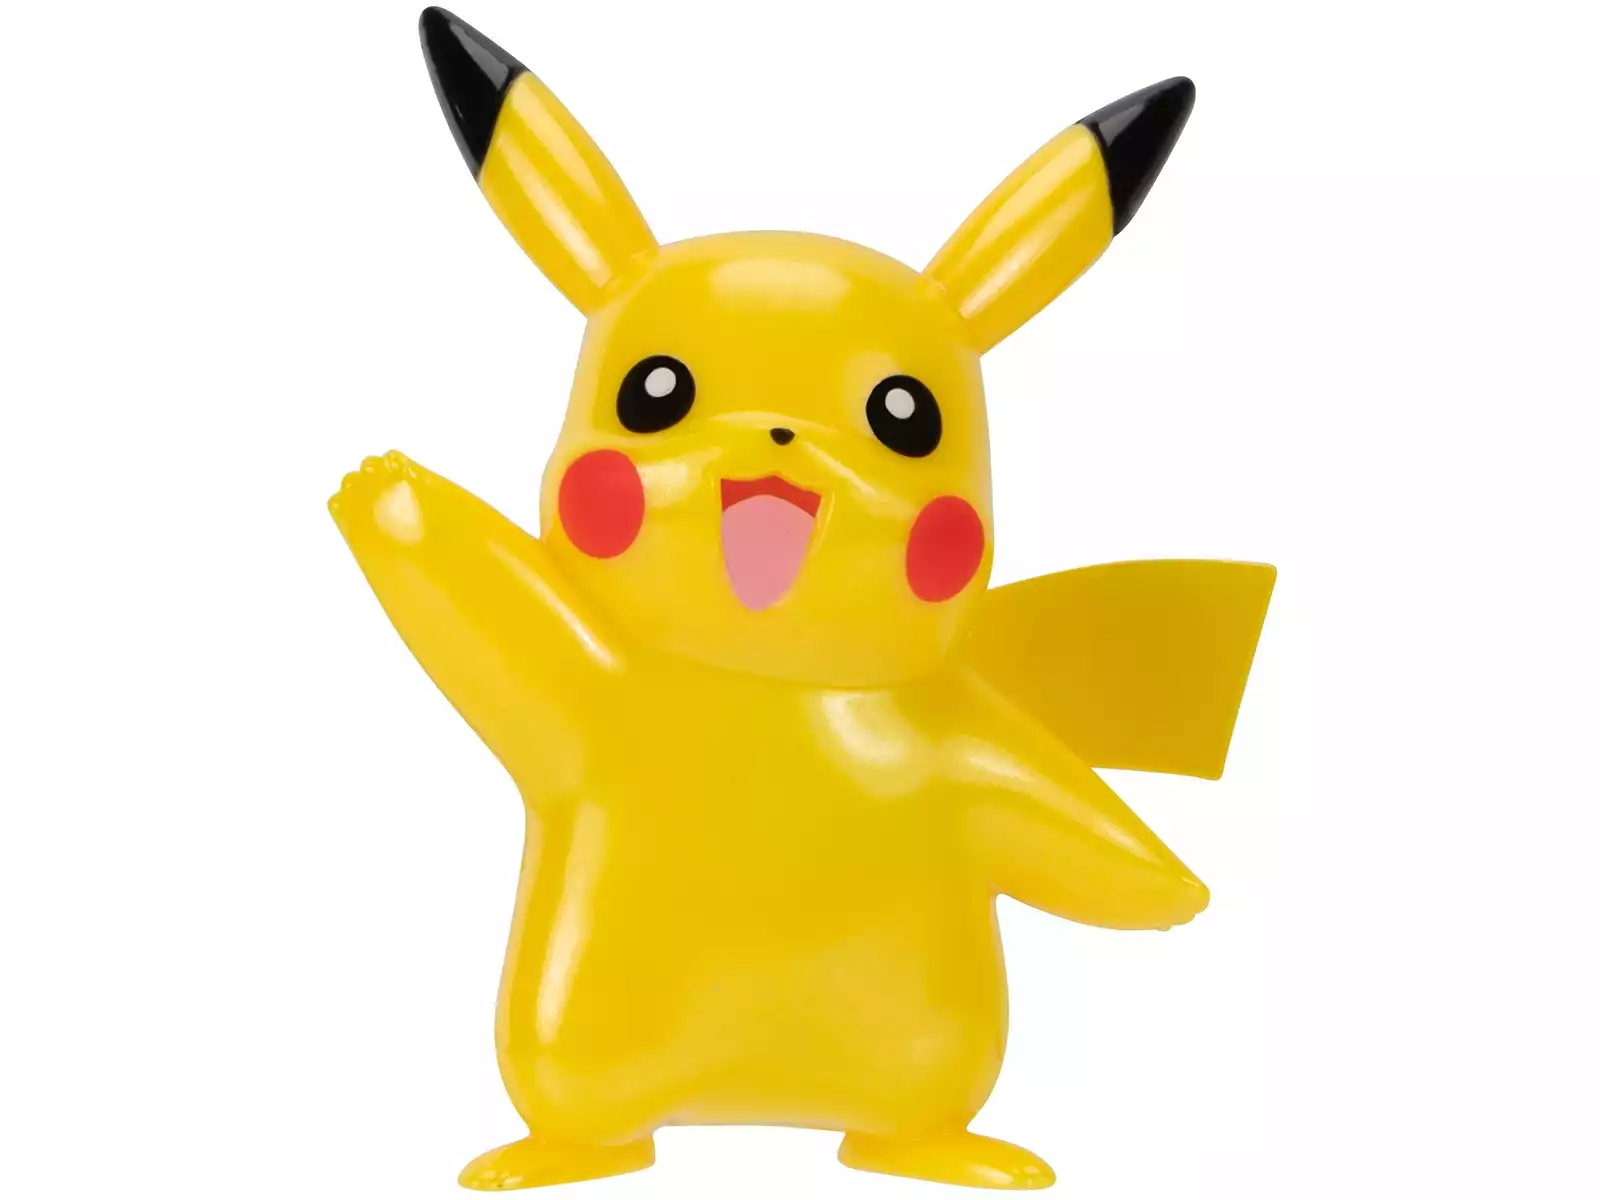 Romper Pikachu Pokemon (3 A 9 Meses) Menino Bebês Fantasia